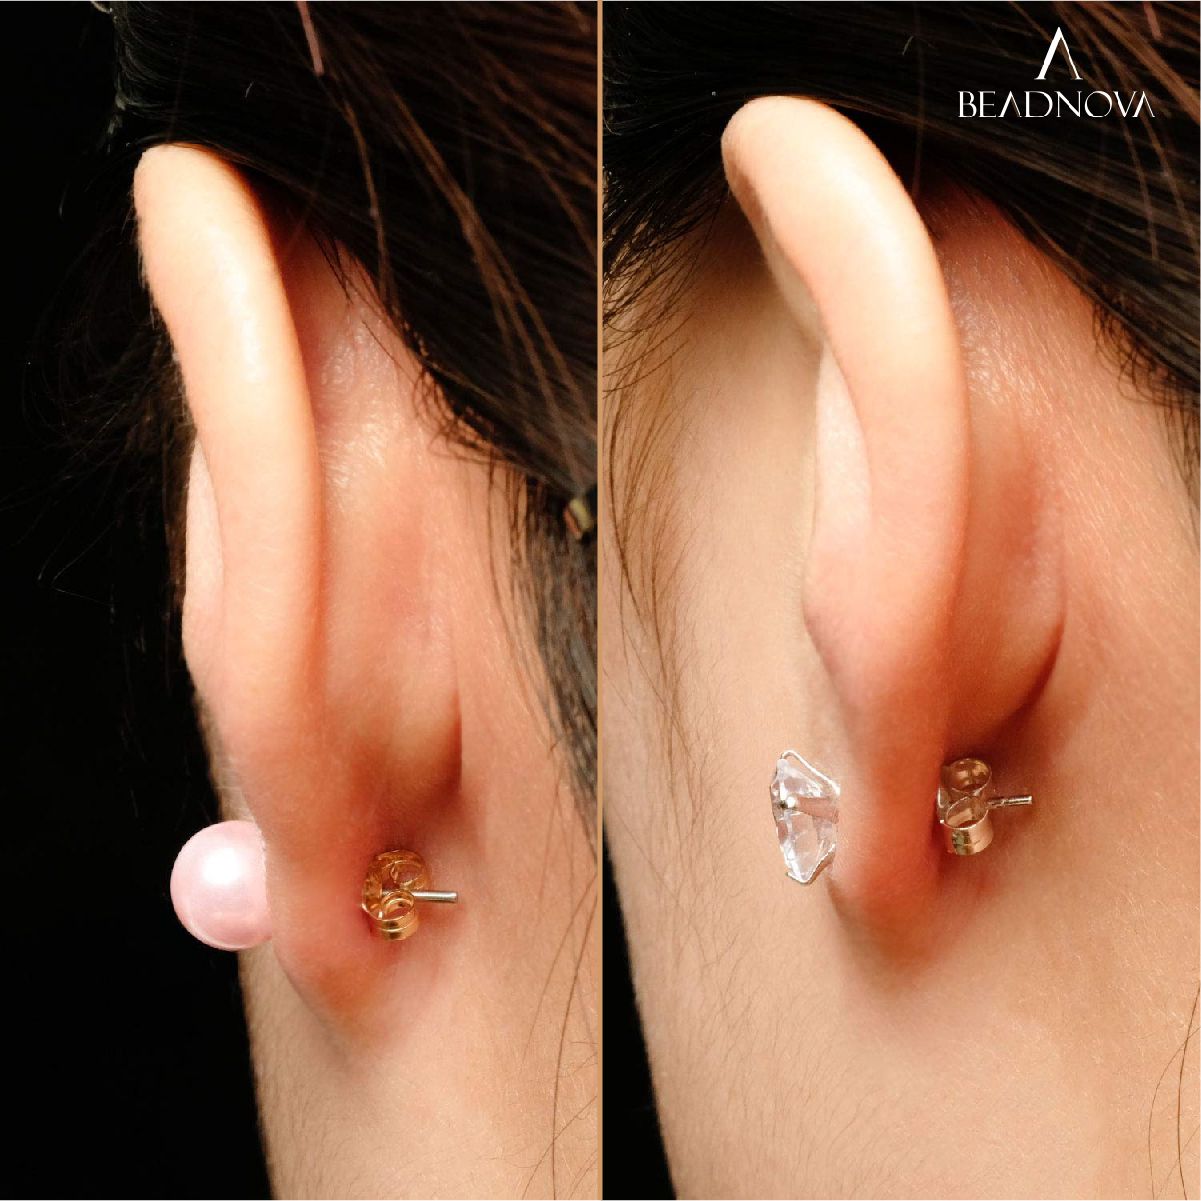 BEADNOVA Jumbo Earring Backs 925 Sterling Silver Large Earring Backs  Butterfly Locking Earring Backs for Studs Replacement (20Gauge, 4pcs)